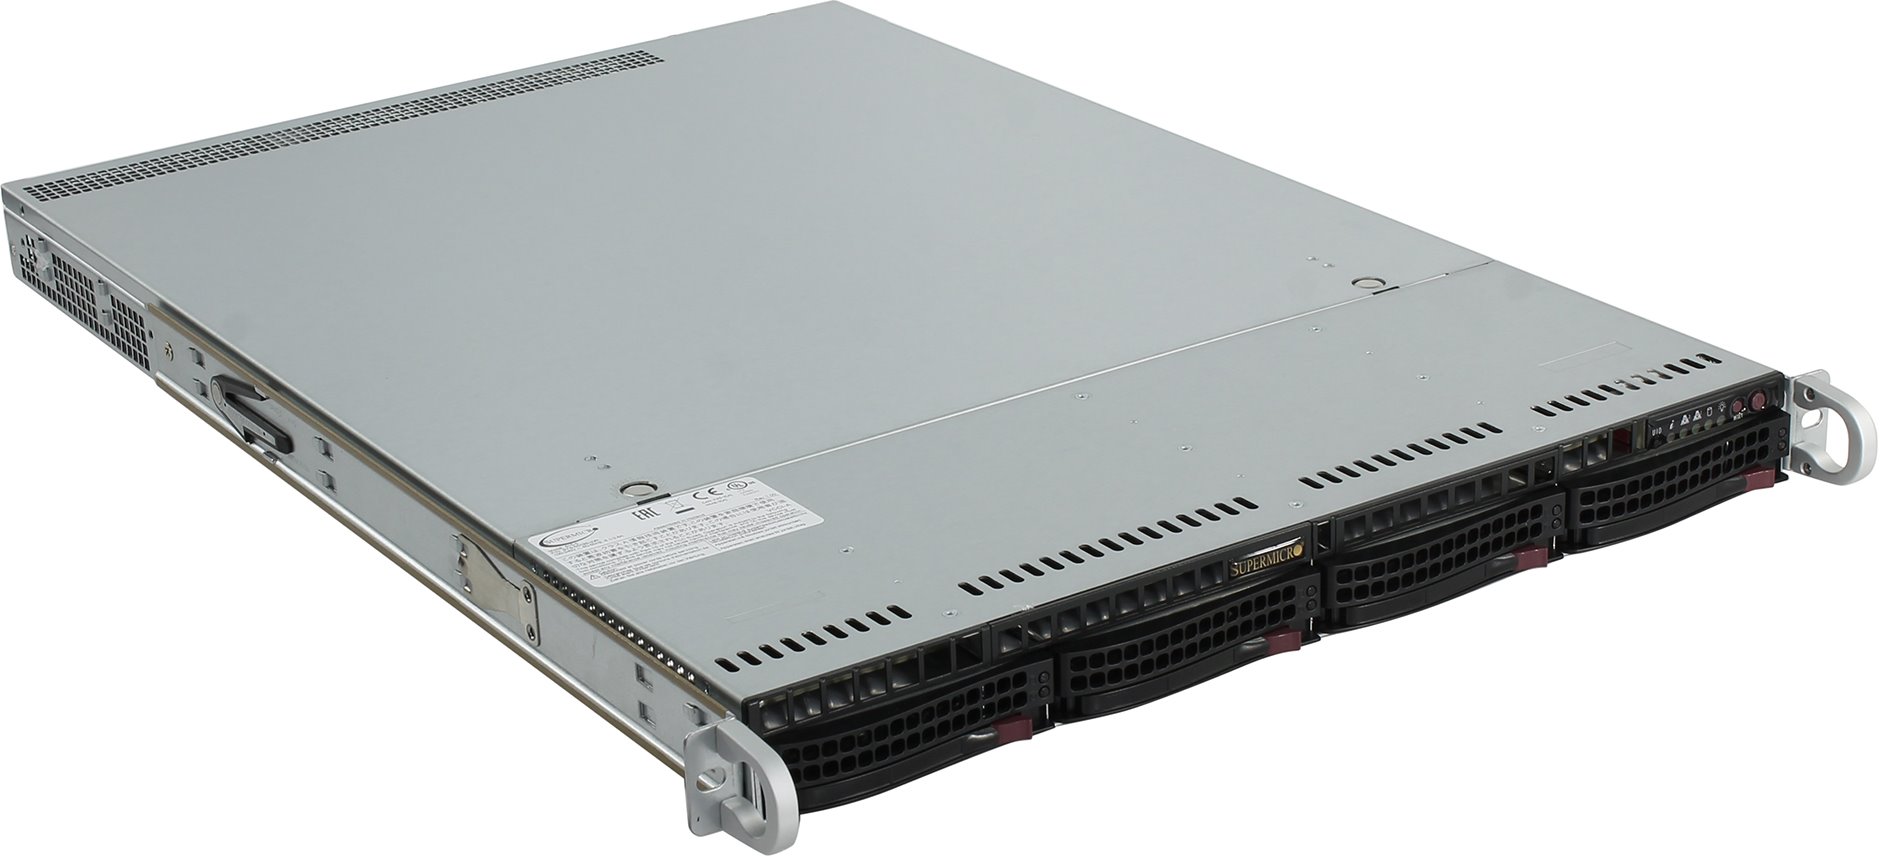 Платформа Supermicro SuperServer 1U 5019P-M noCPU(1)Scalable/TDP 70-165W/ no DIMM(6)/ SATARAID HDD(4)LFF/ 2xGbE/1xFH, M2/ 1x350W